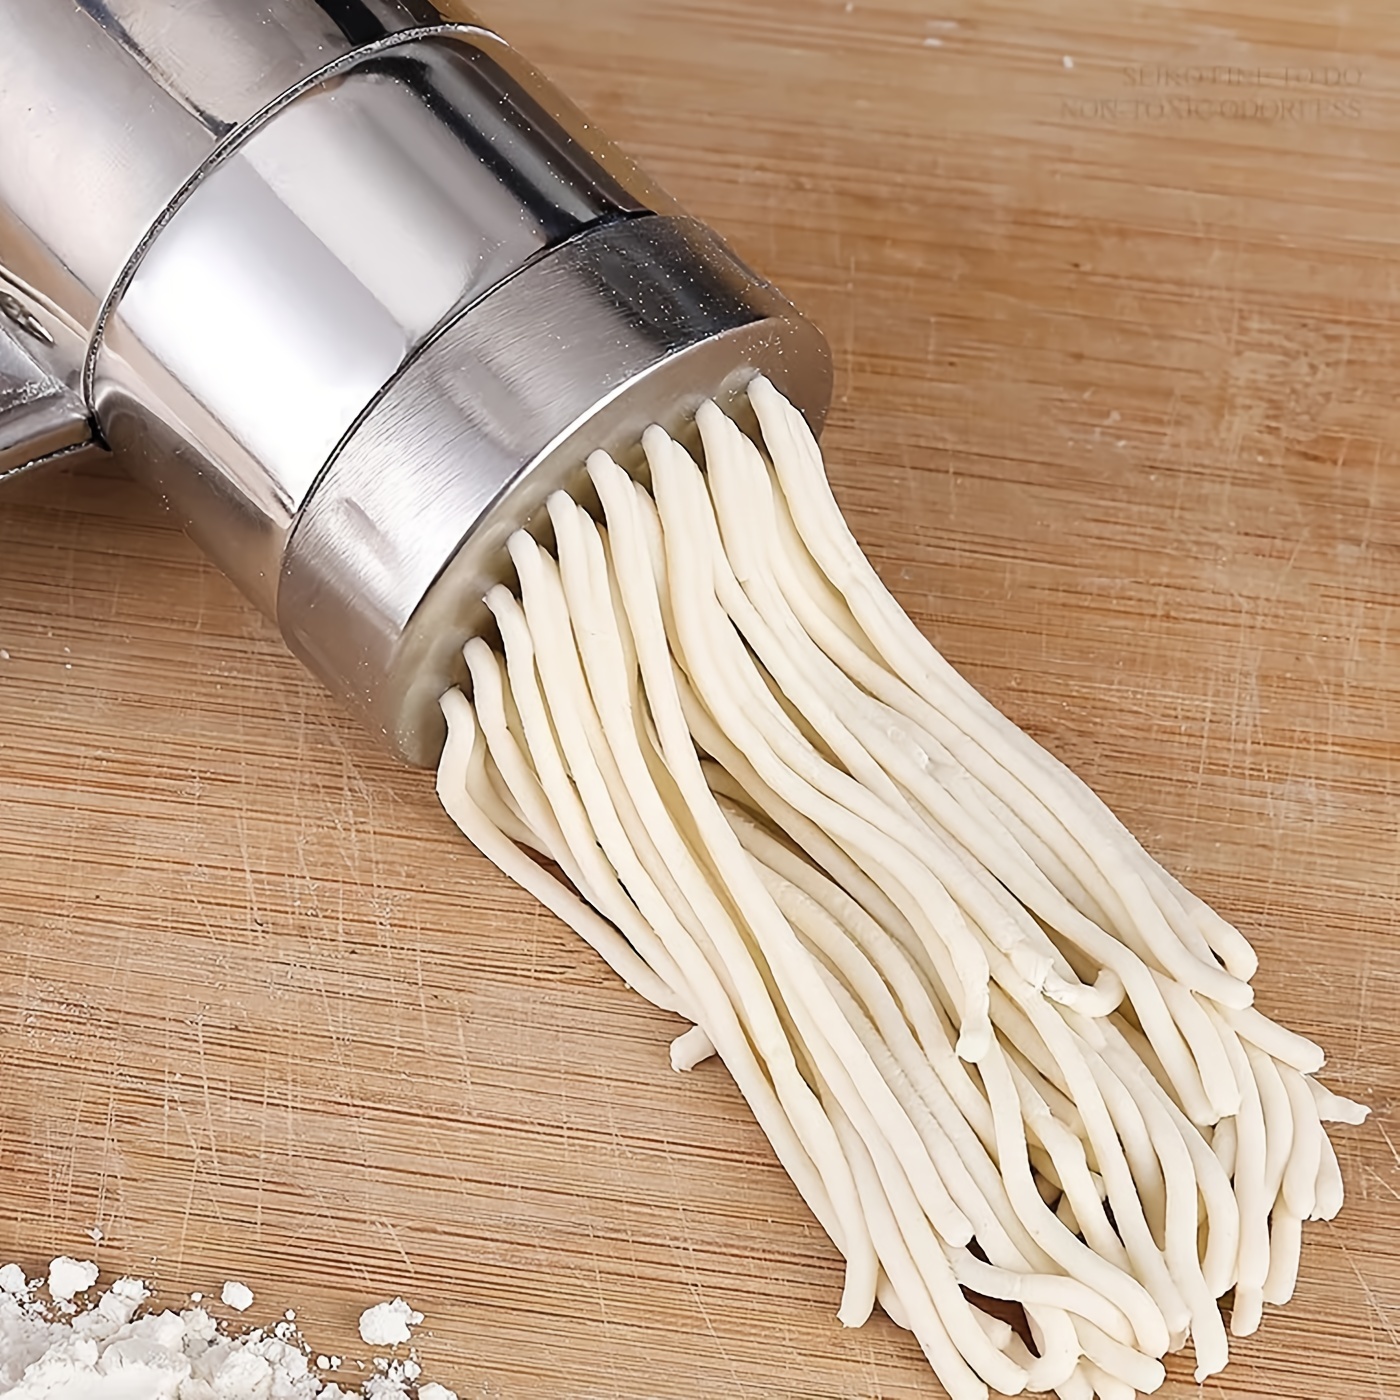 1 Set of Manual Noodles Press Machine Stainless Steel Pasta Maker Household  Noodle Maker